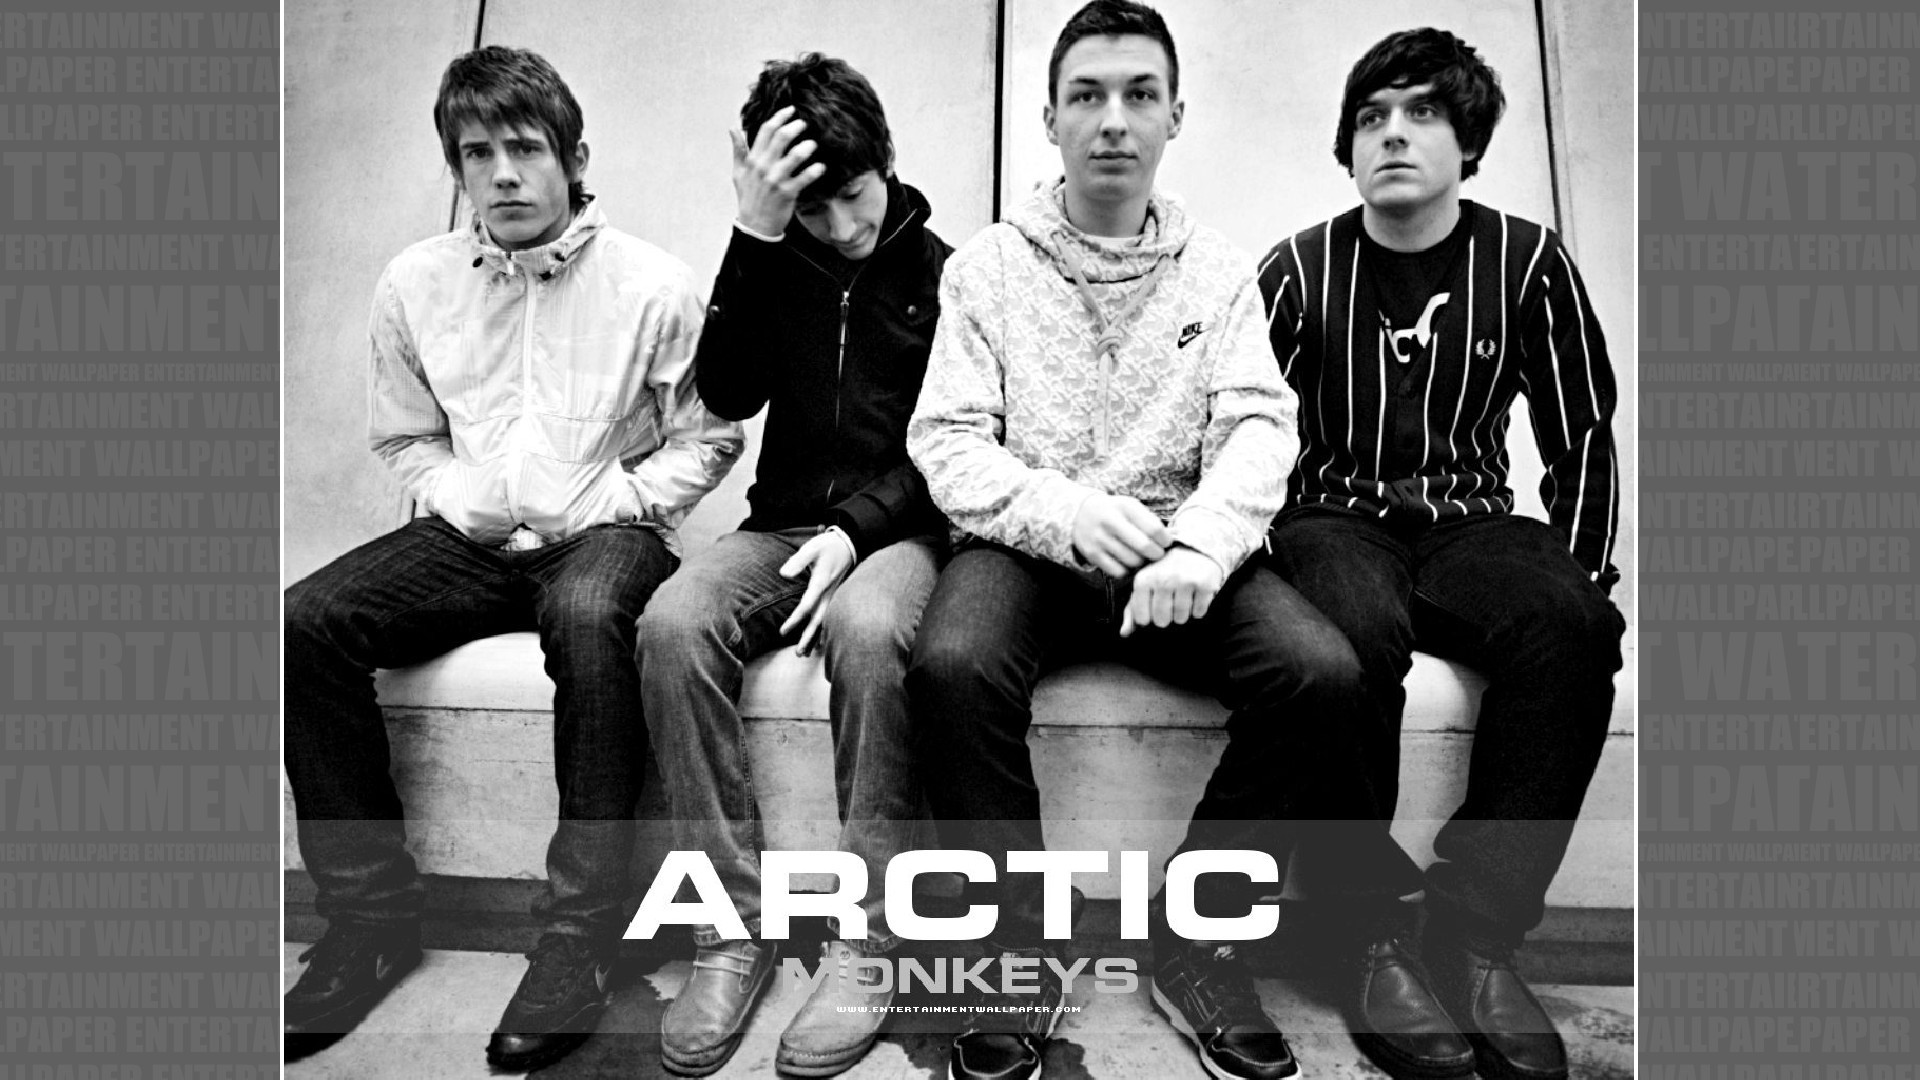 1920x1080 Arctic Monkeys Wallpaper - Original size, download now.